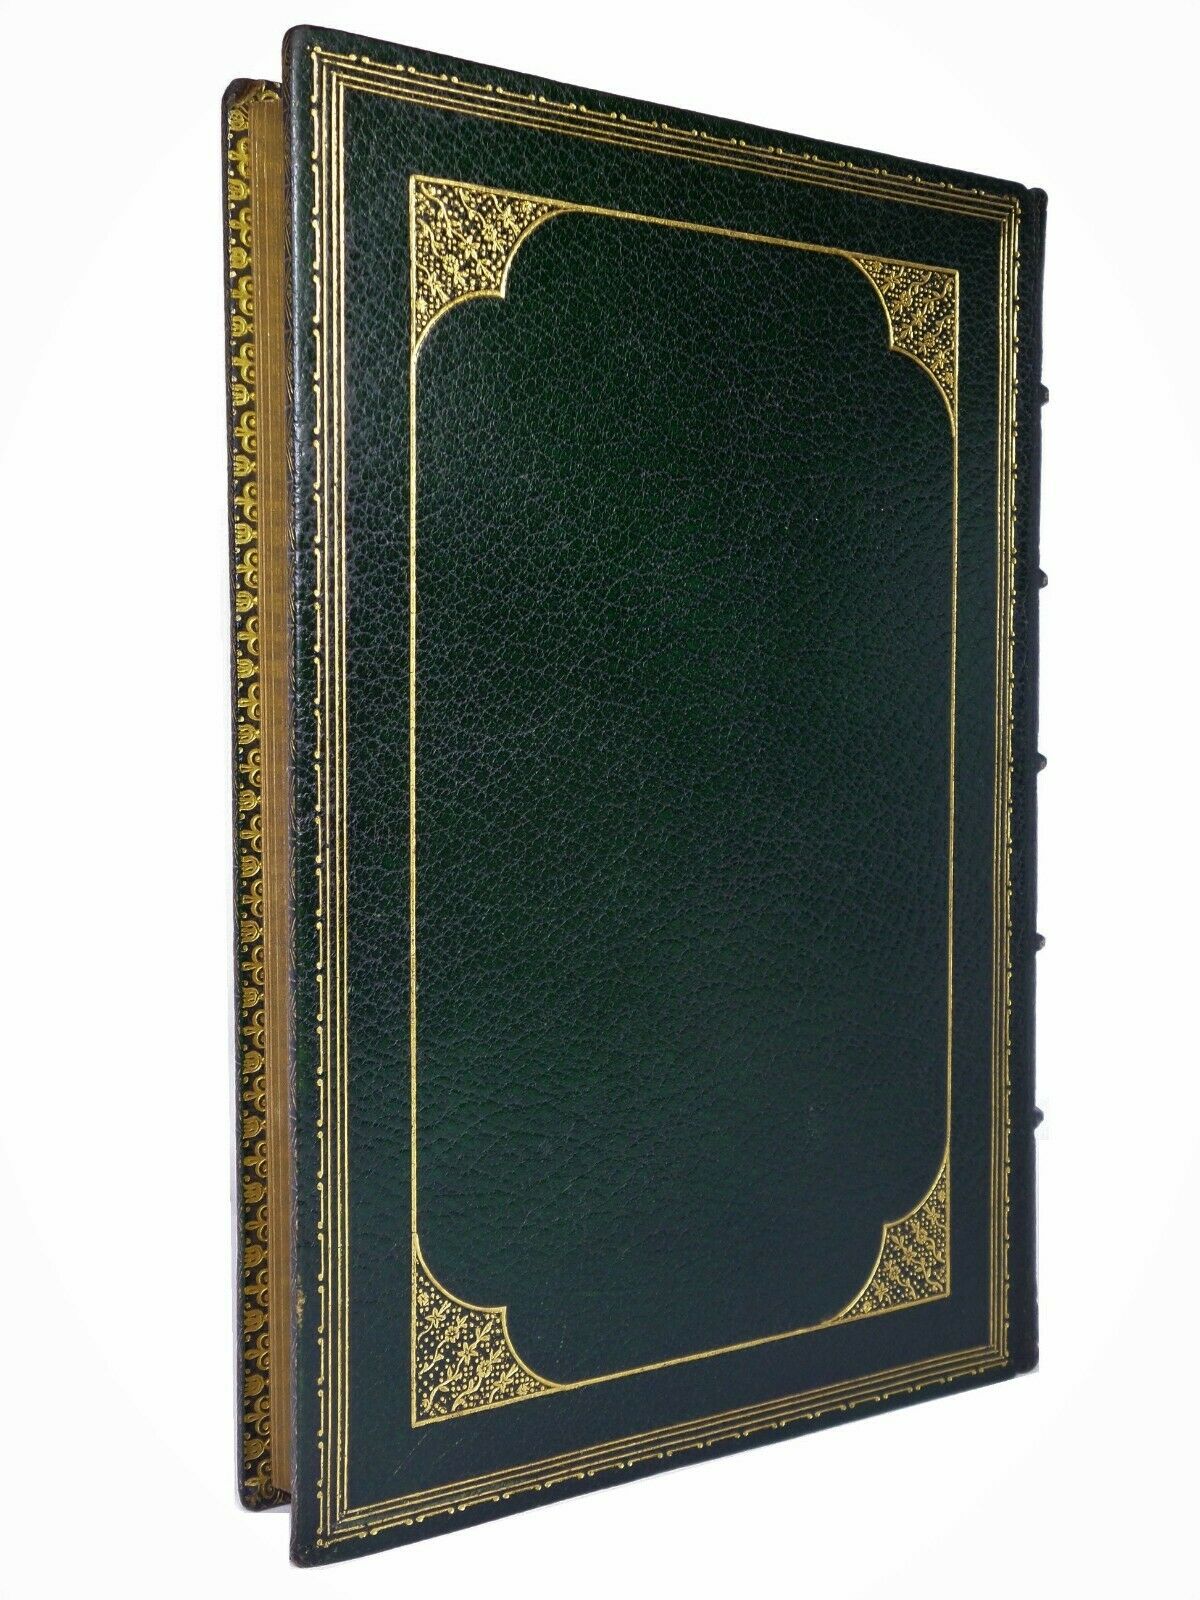 LOSTARA: A POEM BY SOPHIA LYDIA WALTERS 1890 FIRST EDITION, FINE LEATHER BINDING